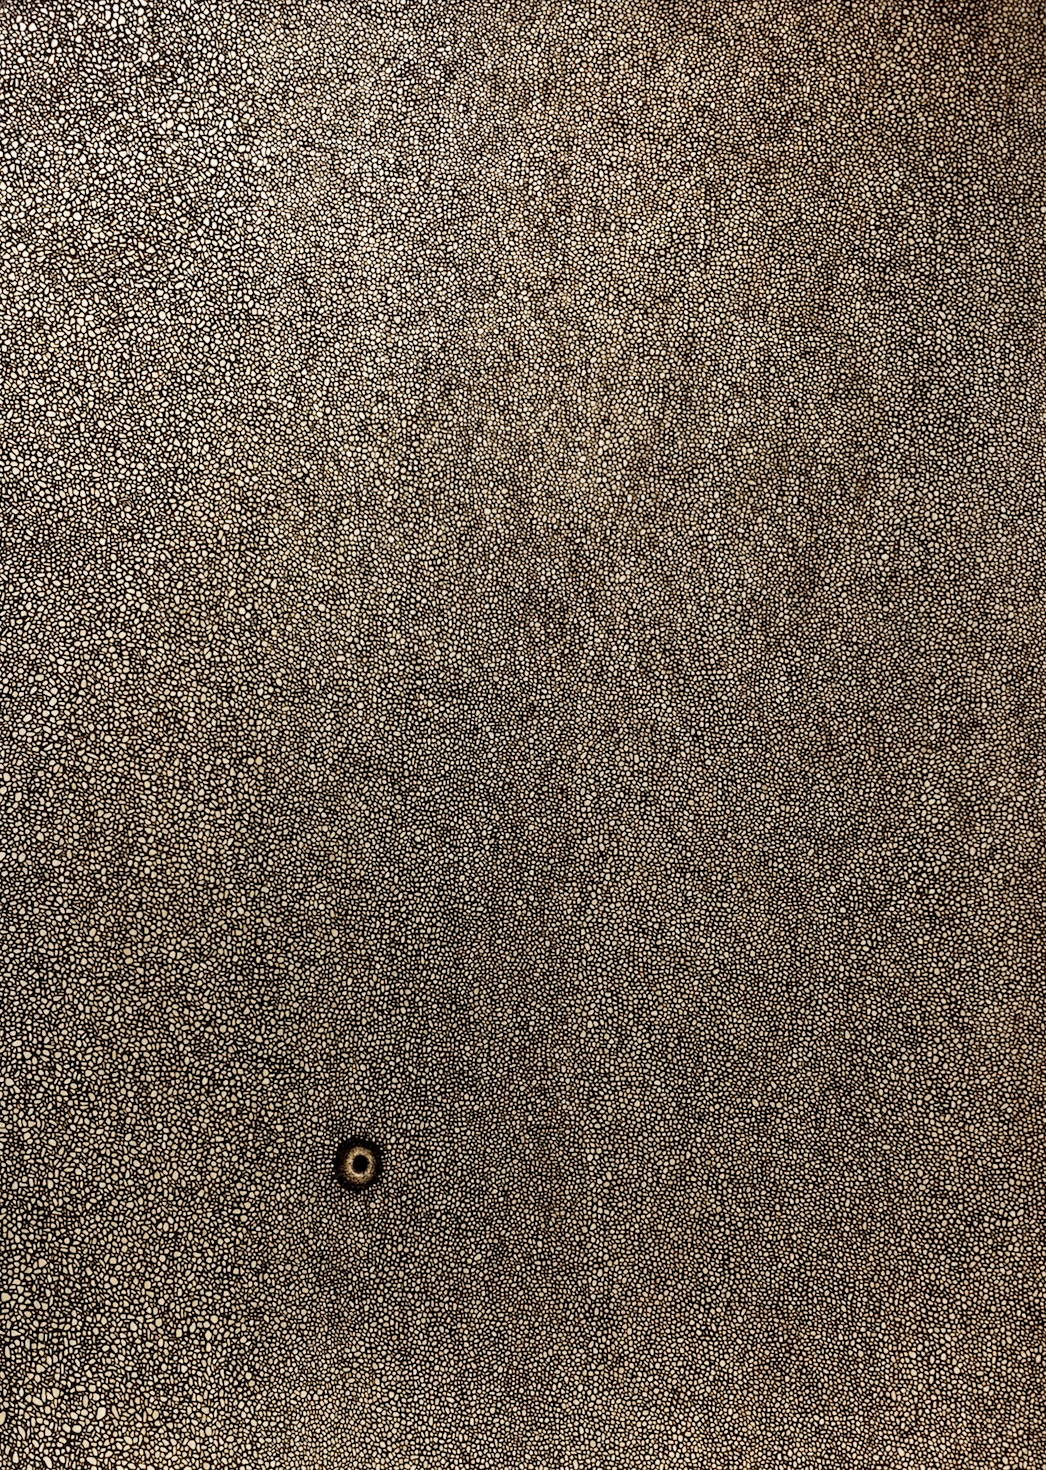 RE:BORN 22130, Pyrography on birch 65.1x90.9x2.4cm